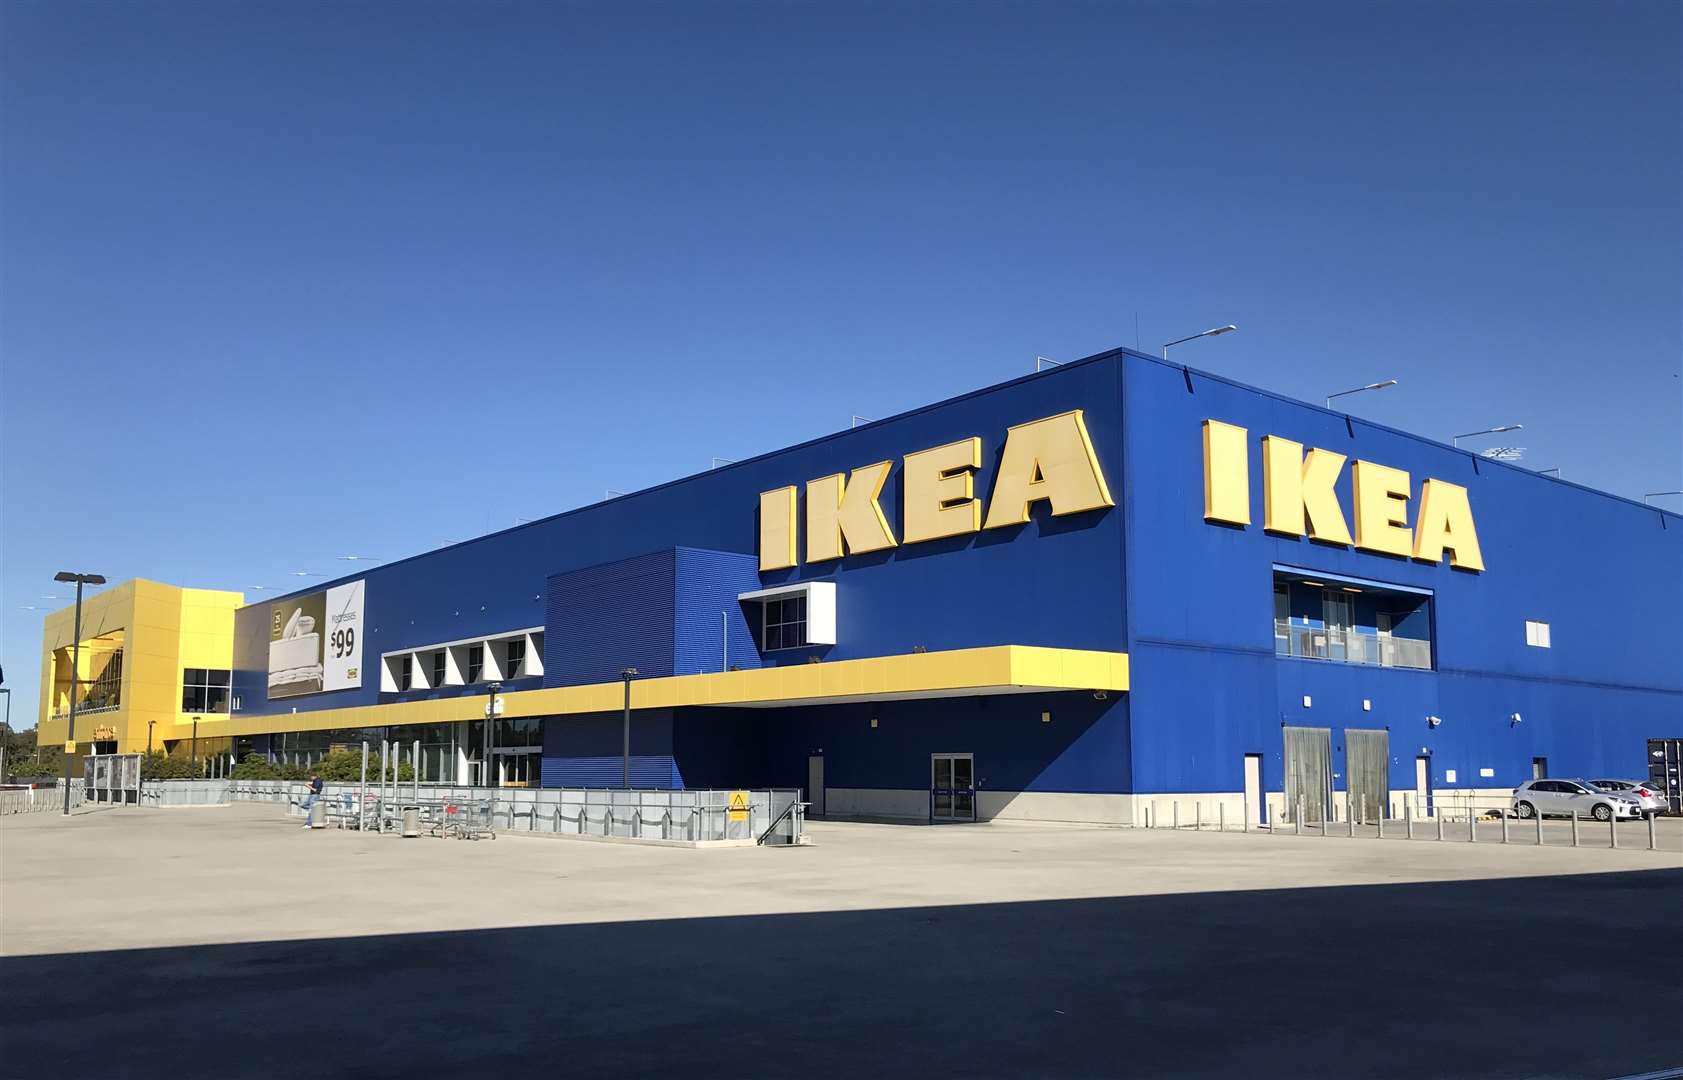 Ikea Not Currently Considering Opening Kent Store Despite Huge Demand